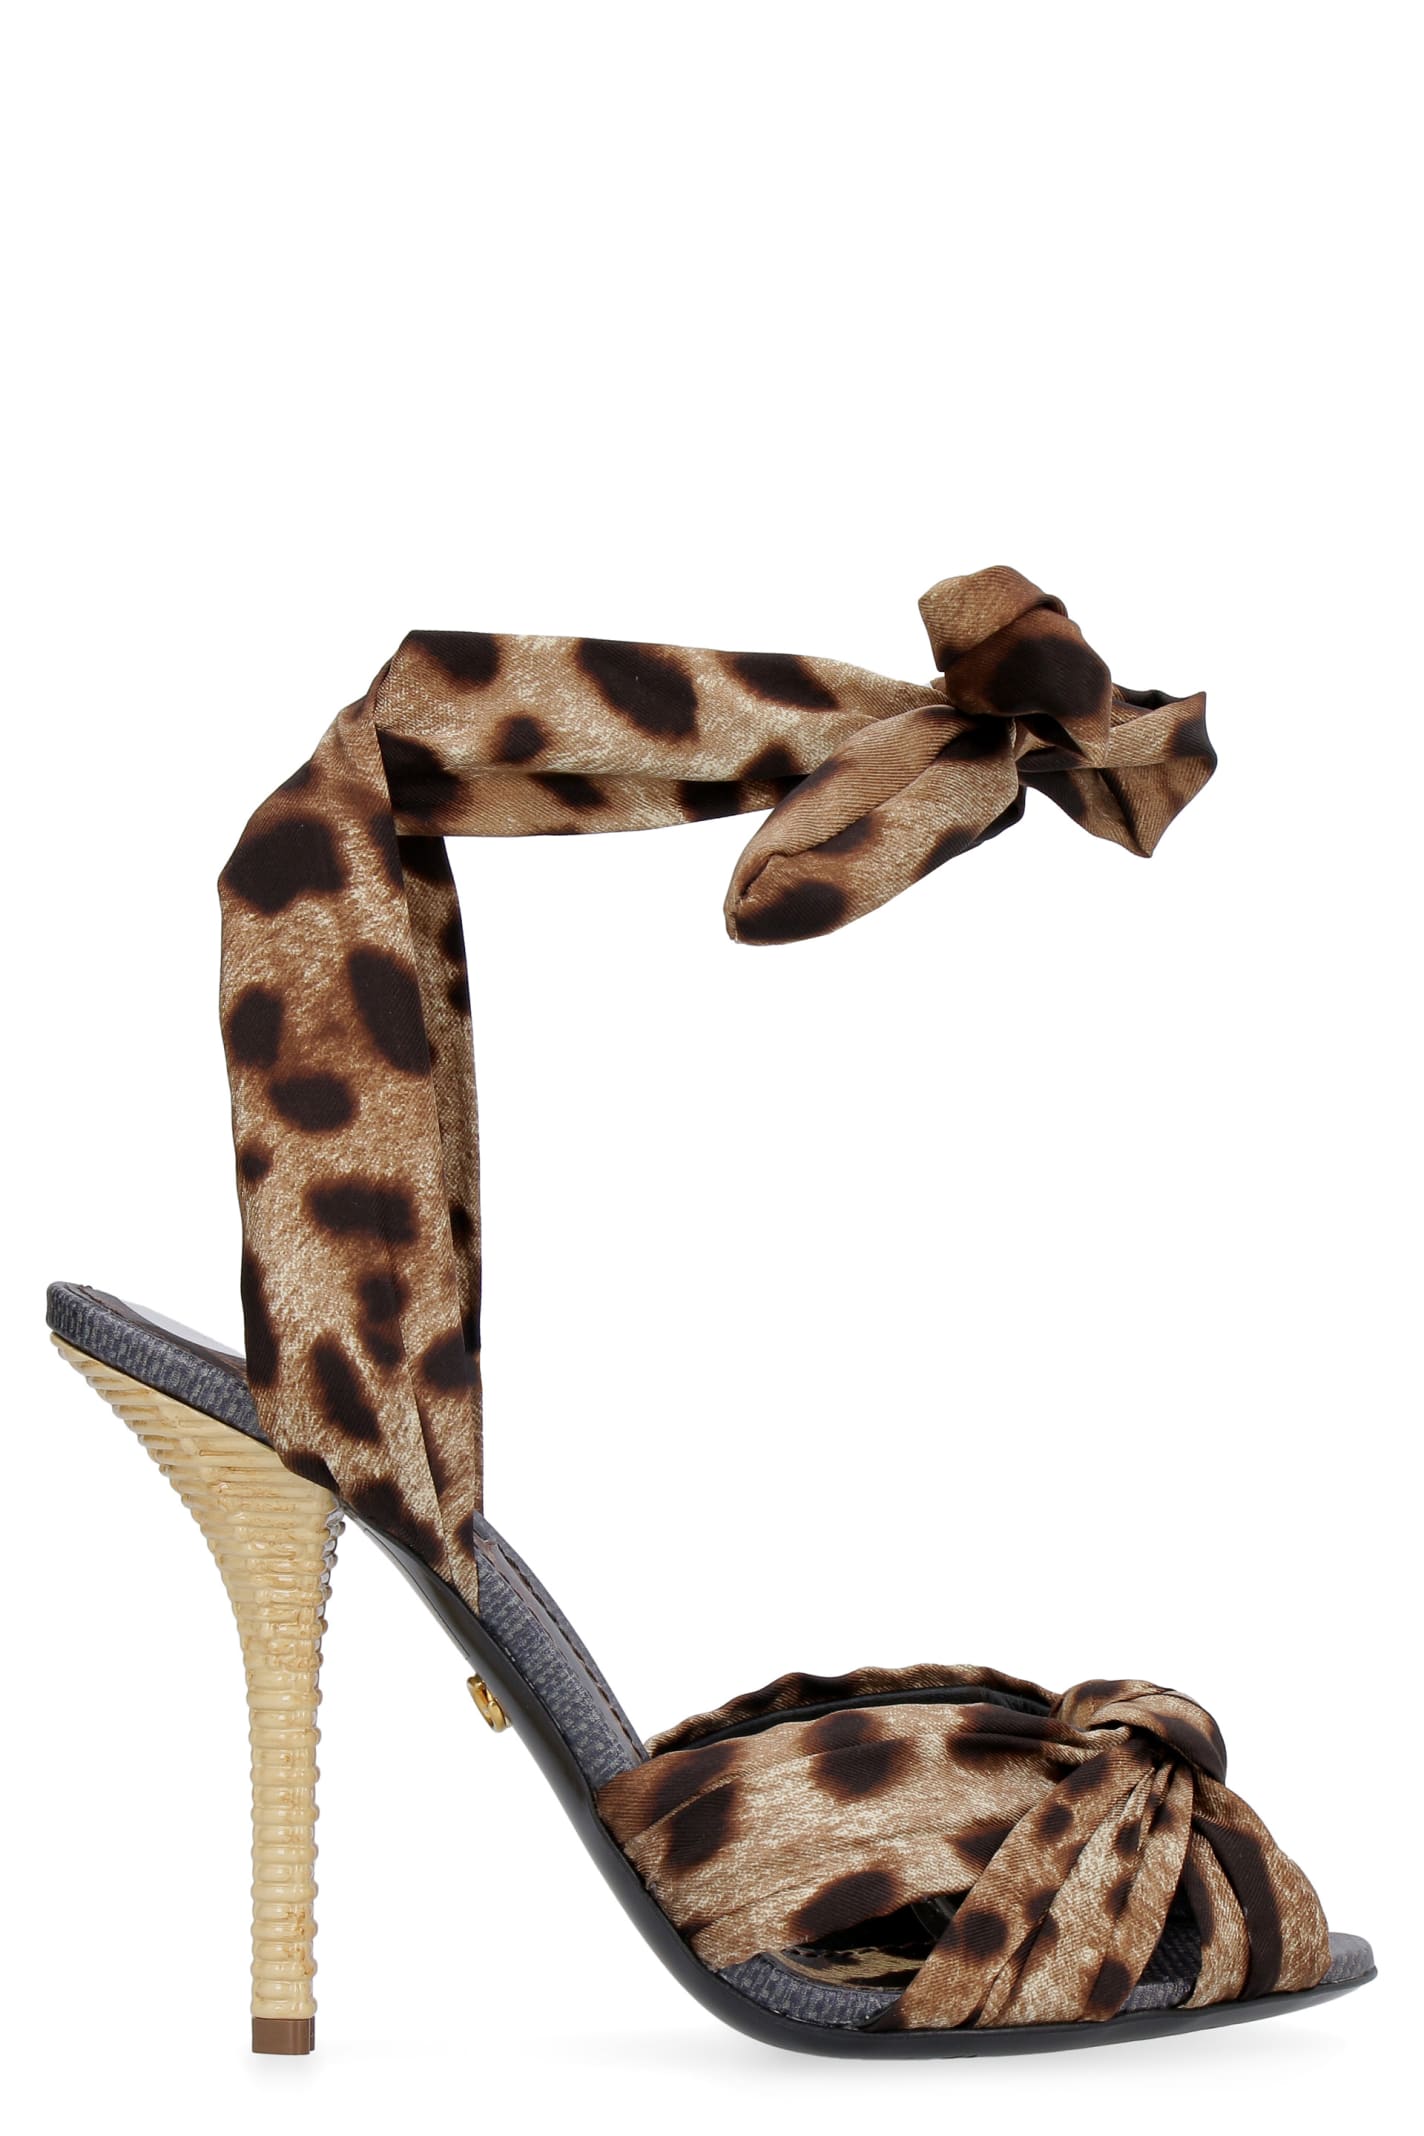 Dolce & Gabbana Keira Satin Sandals With Heel